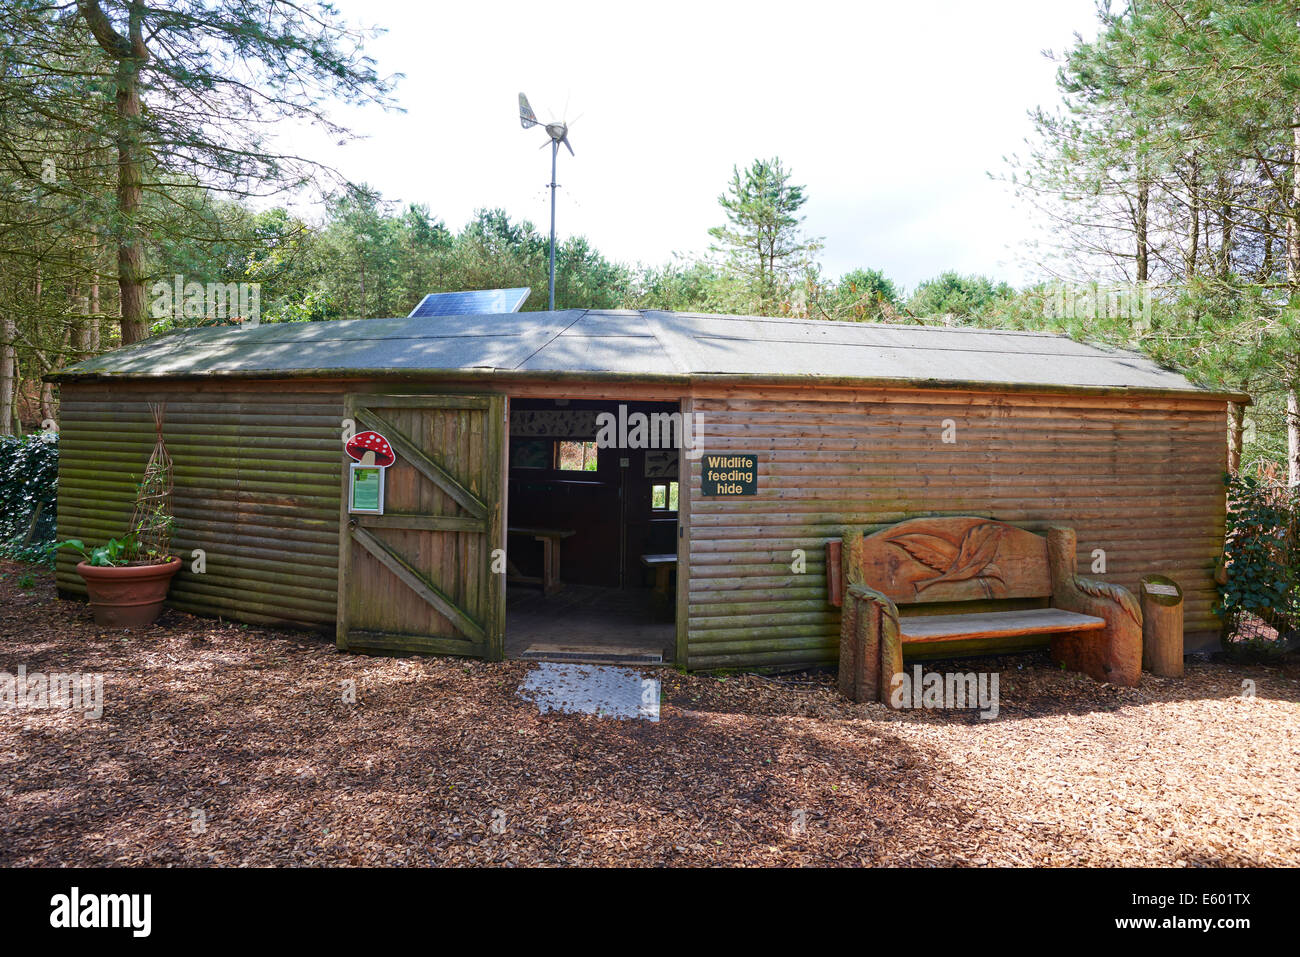 Exterior Of The Wildlife Feeding Hide Center Parcs Sherwood Forest UK Stock Photo